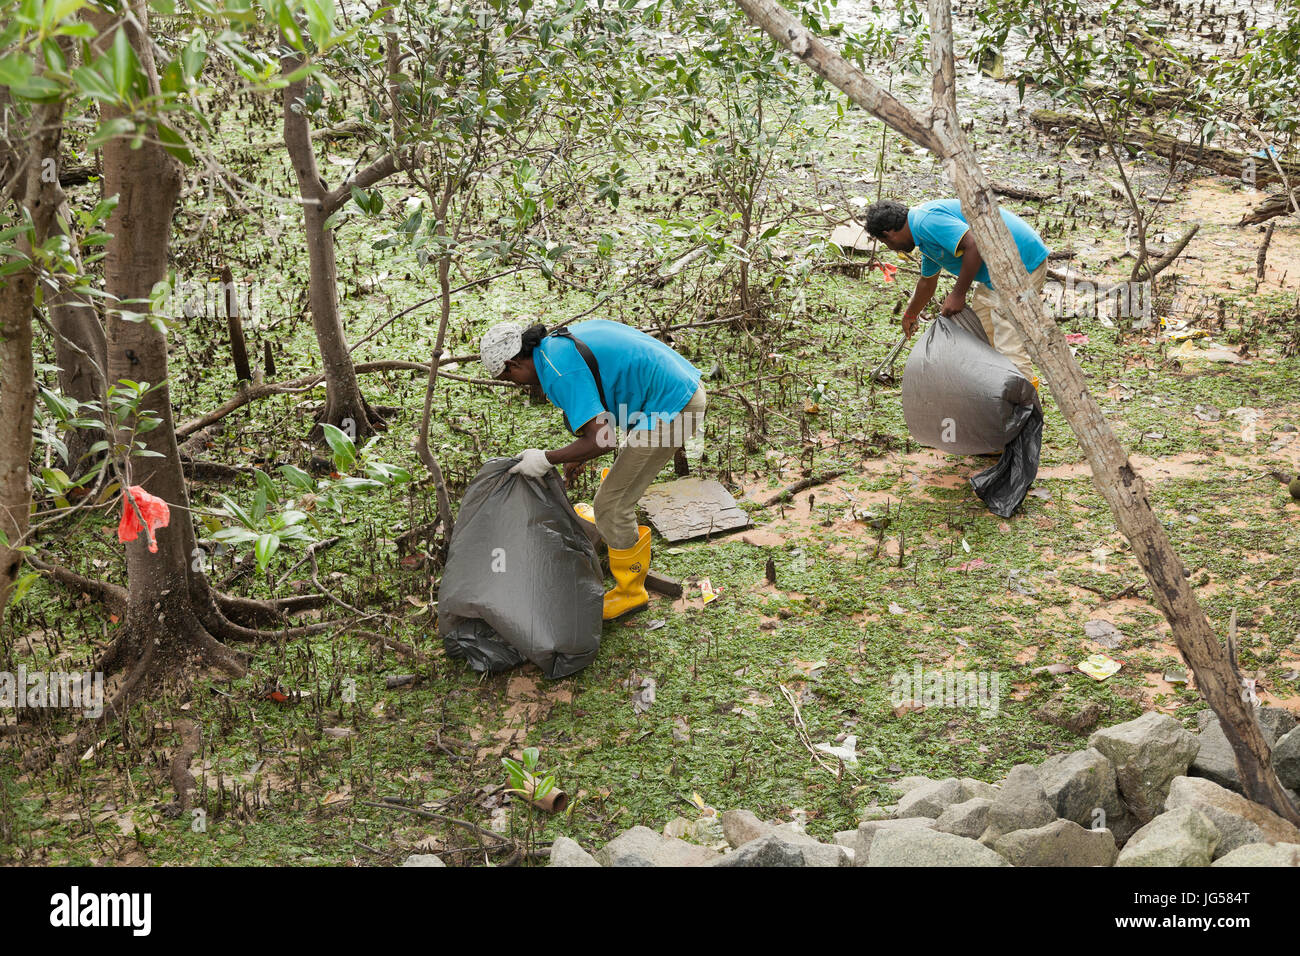 Clearing-Müll aus den Mangroven, Ebbe, reservieren Singapur Sungai Buloh Küste Stockfoto